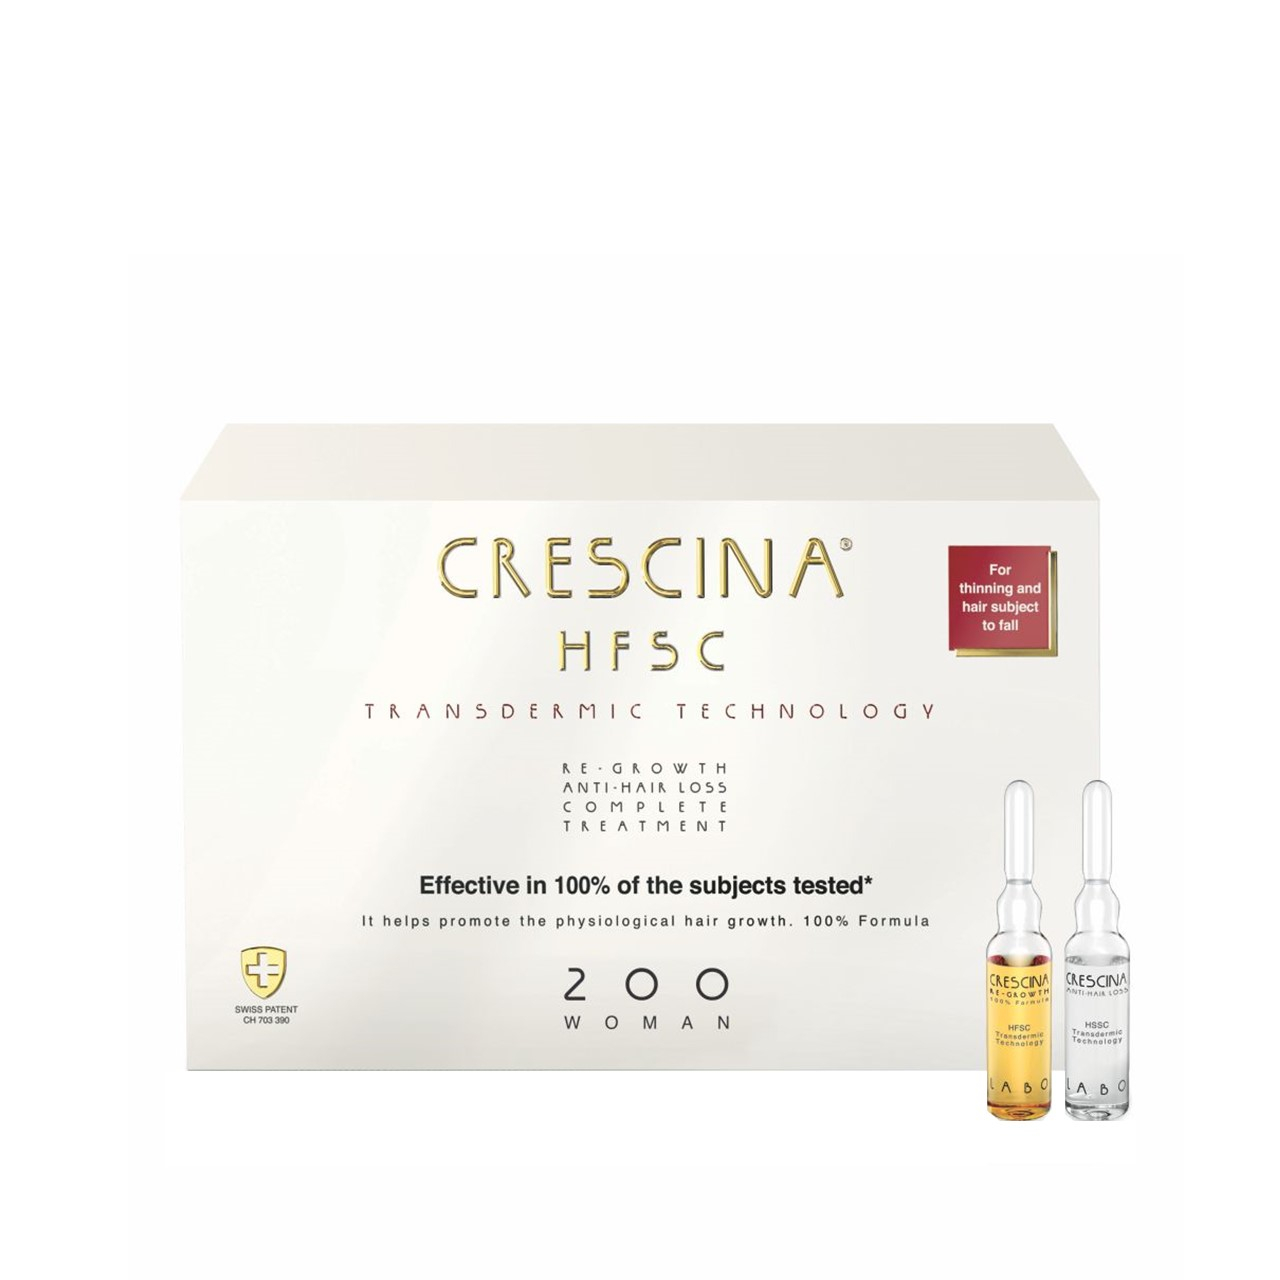 Crescina HFSC Transdermic Treatment 200 Woman Ampoules 3.5ml x10+10 (10+10x0.12fl oz)